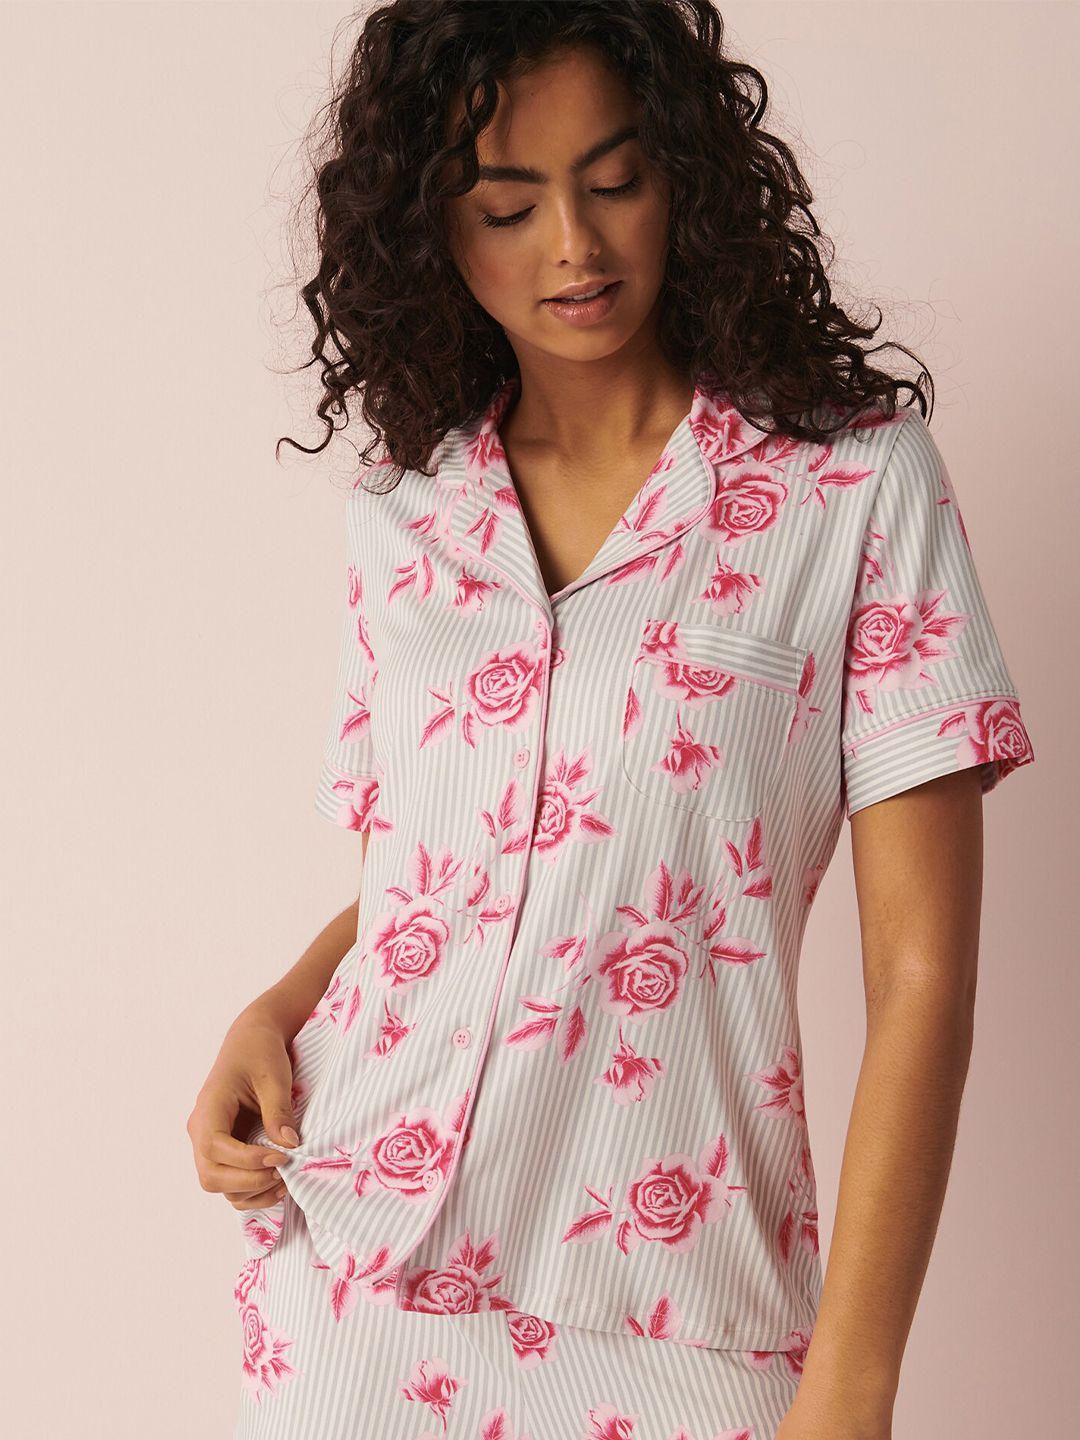 la vie en rose white floral print roll-up sleeves shirt style top